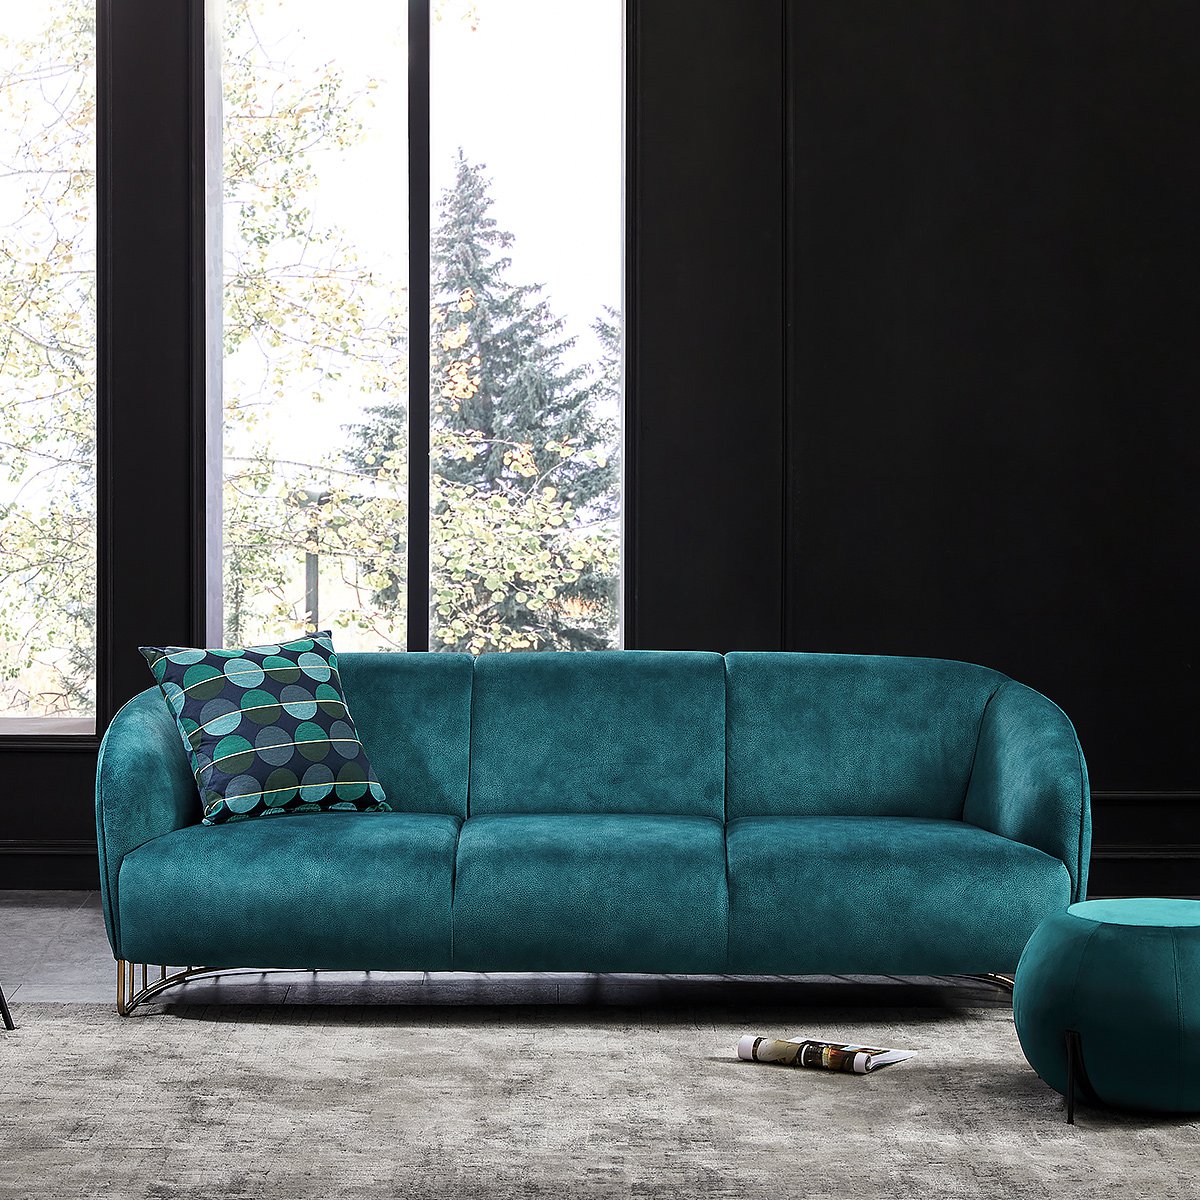 fin北欧风格科技布沙发简约现代客厅弧形休闲多人位布艺沙发